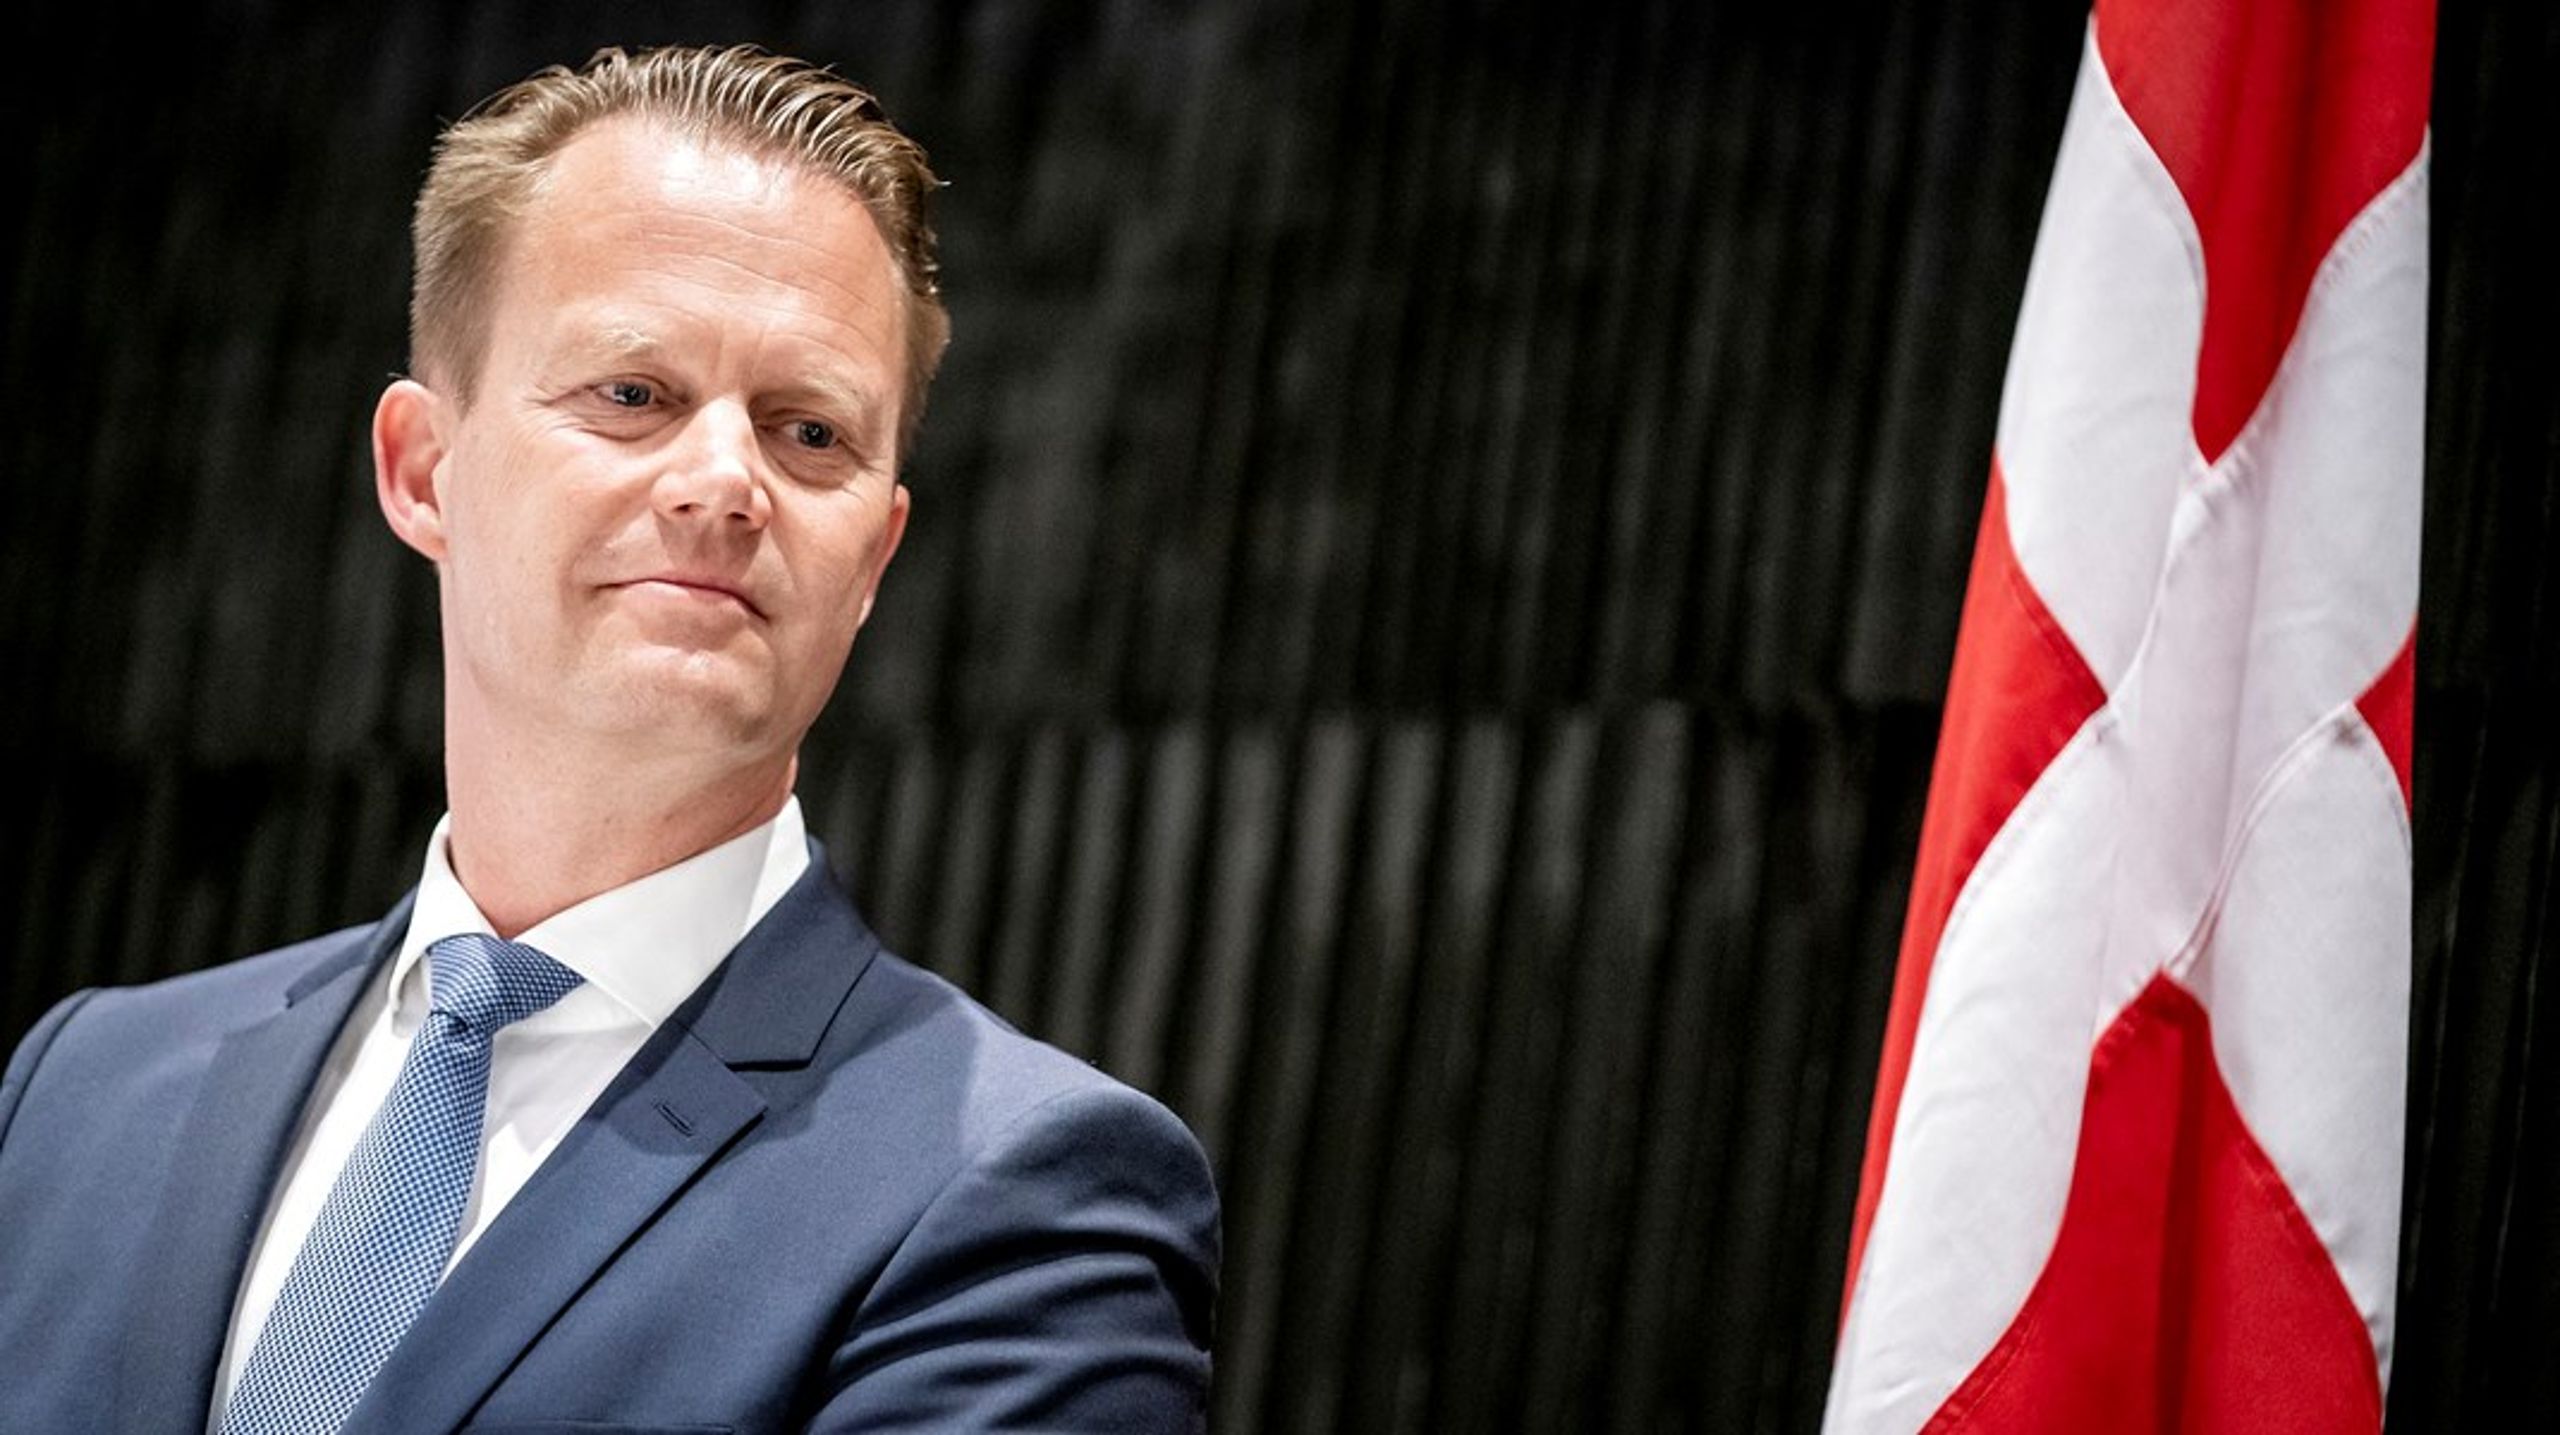 Danmarks interesser er under pres i EU, mener udenrigsminister Jeppe Kofod.